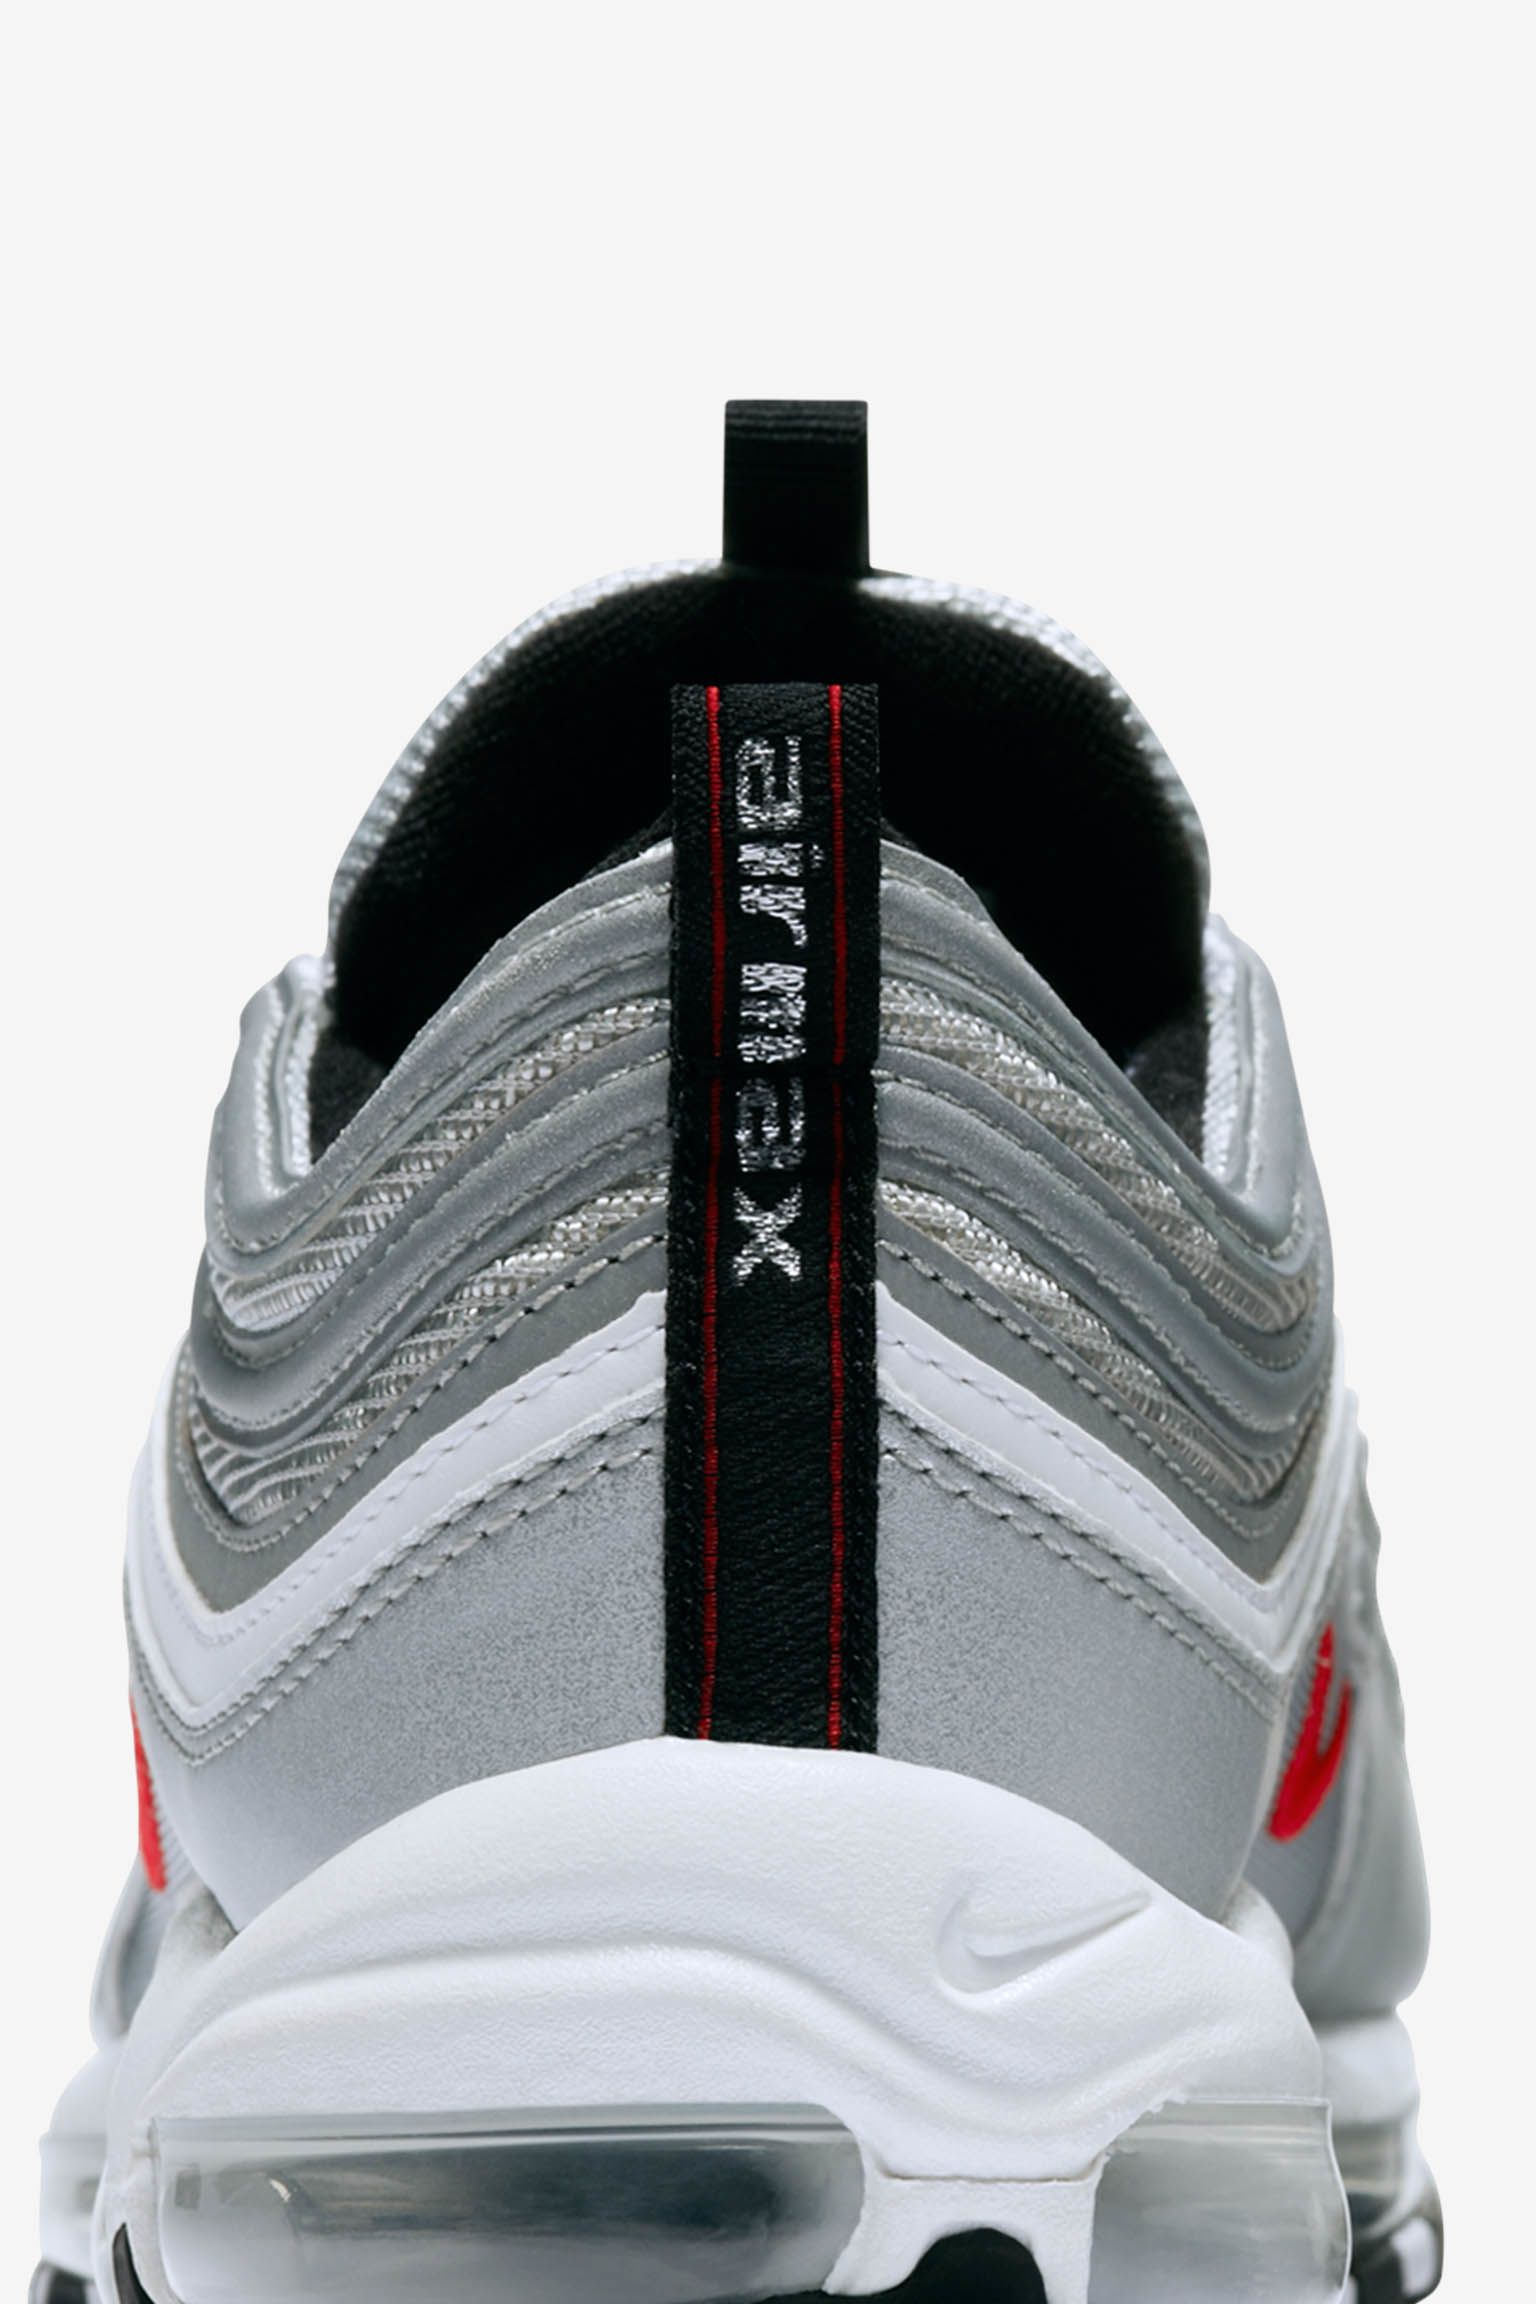 Atticus Diverso Convencional Nike Air Max 97 OG "Metallic Silver". Nike SNKRS ES